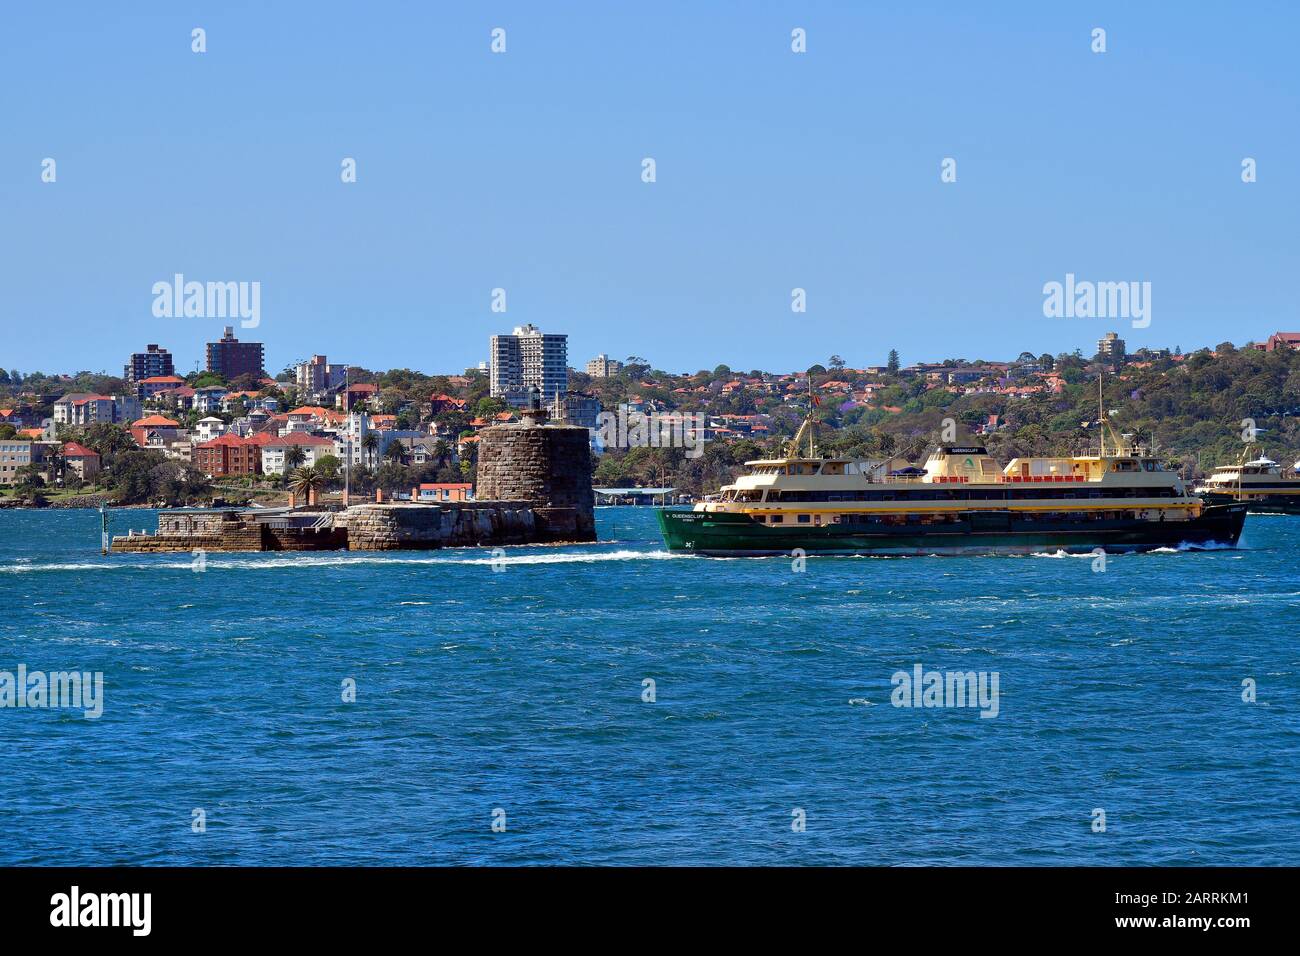 Sydney, NSW, Australia - October 31, 2017: Ferry crossing Fort Denison, former prison and now restaurant in Port Jackson harbor Stock Photo